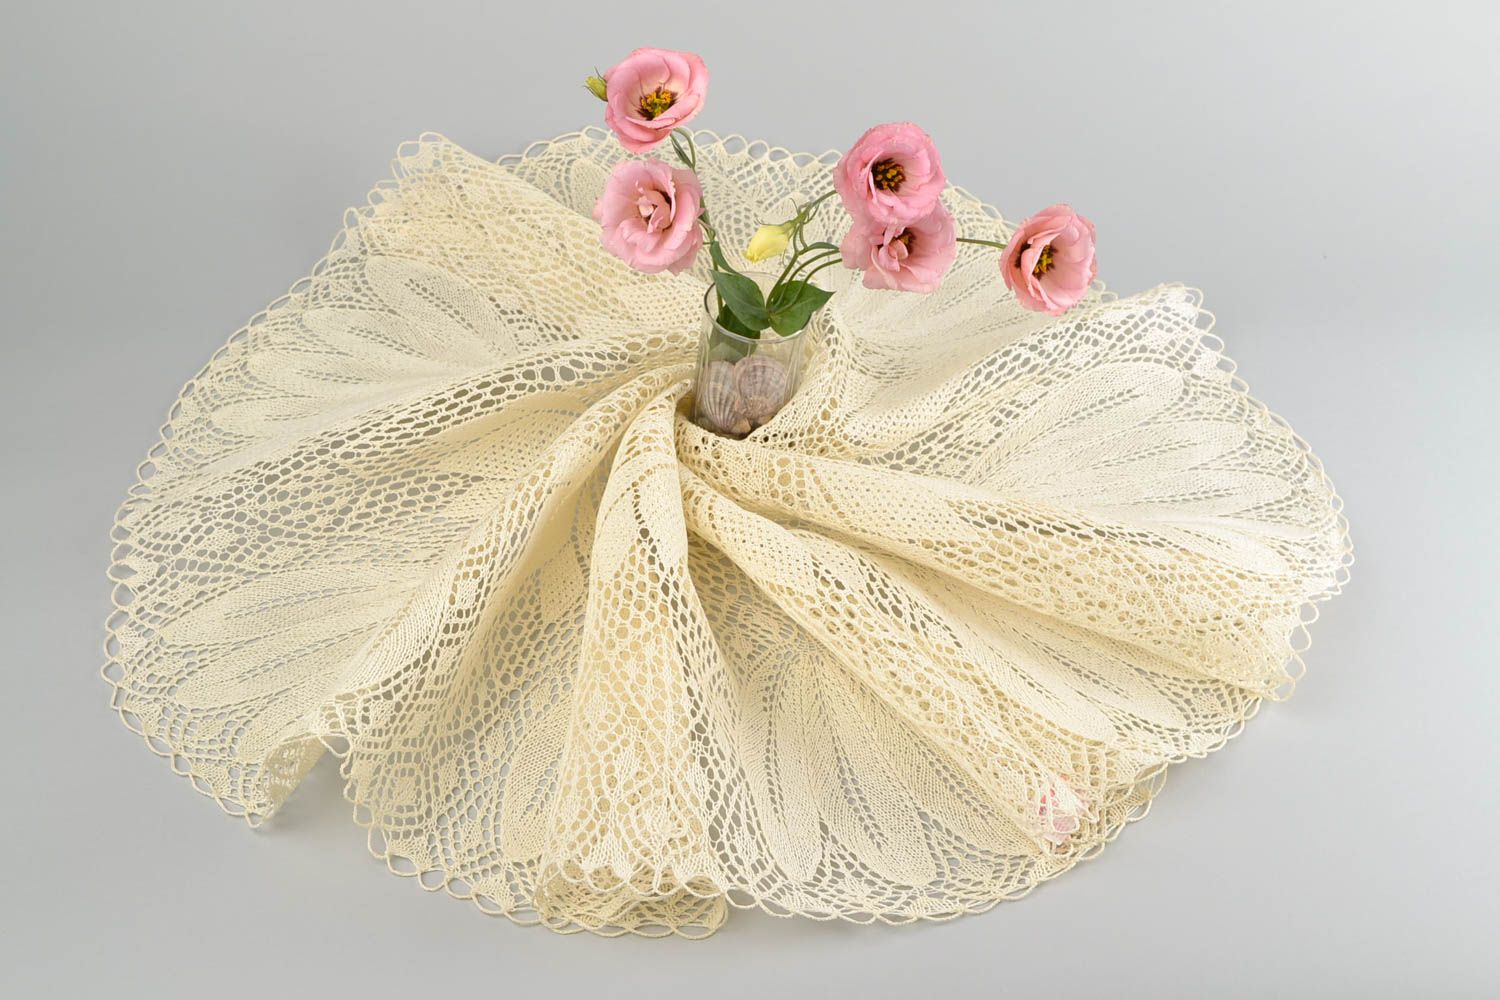 Openwork crochet tablecloth handmade lace napkin vintage style home ideas photo 1